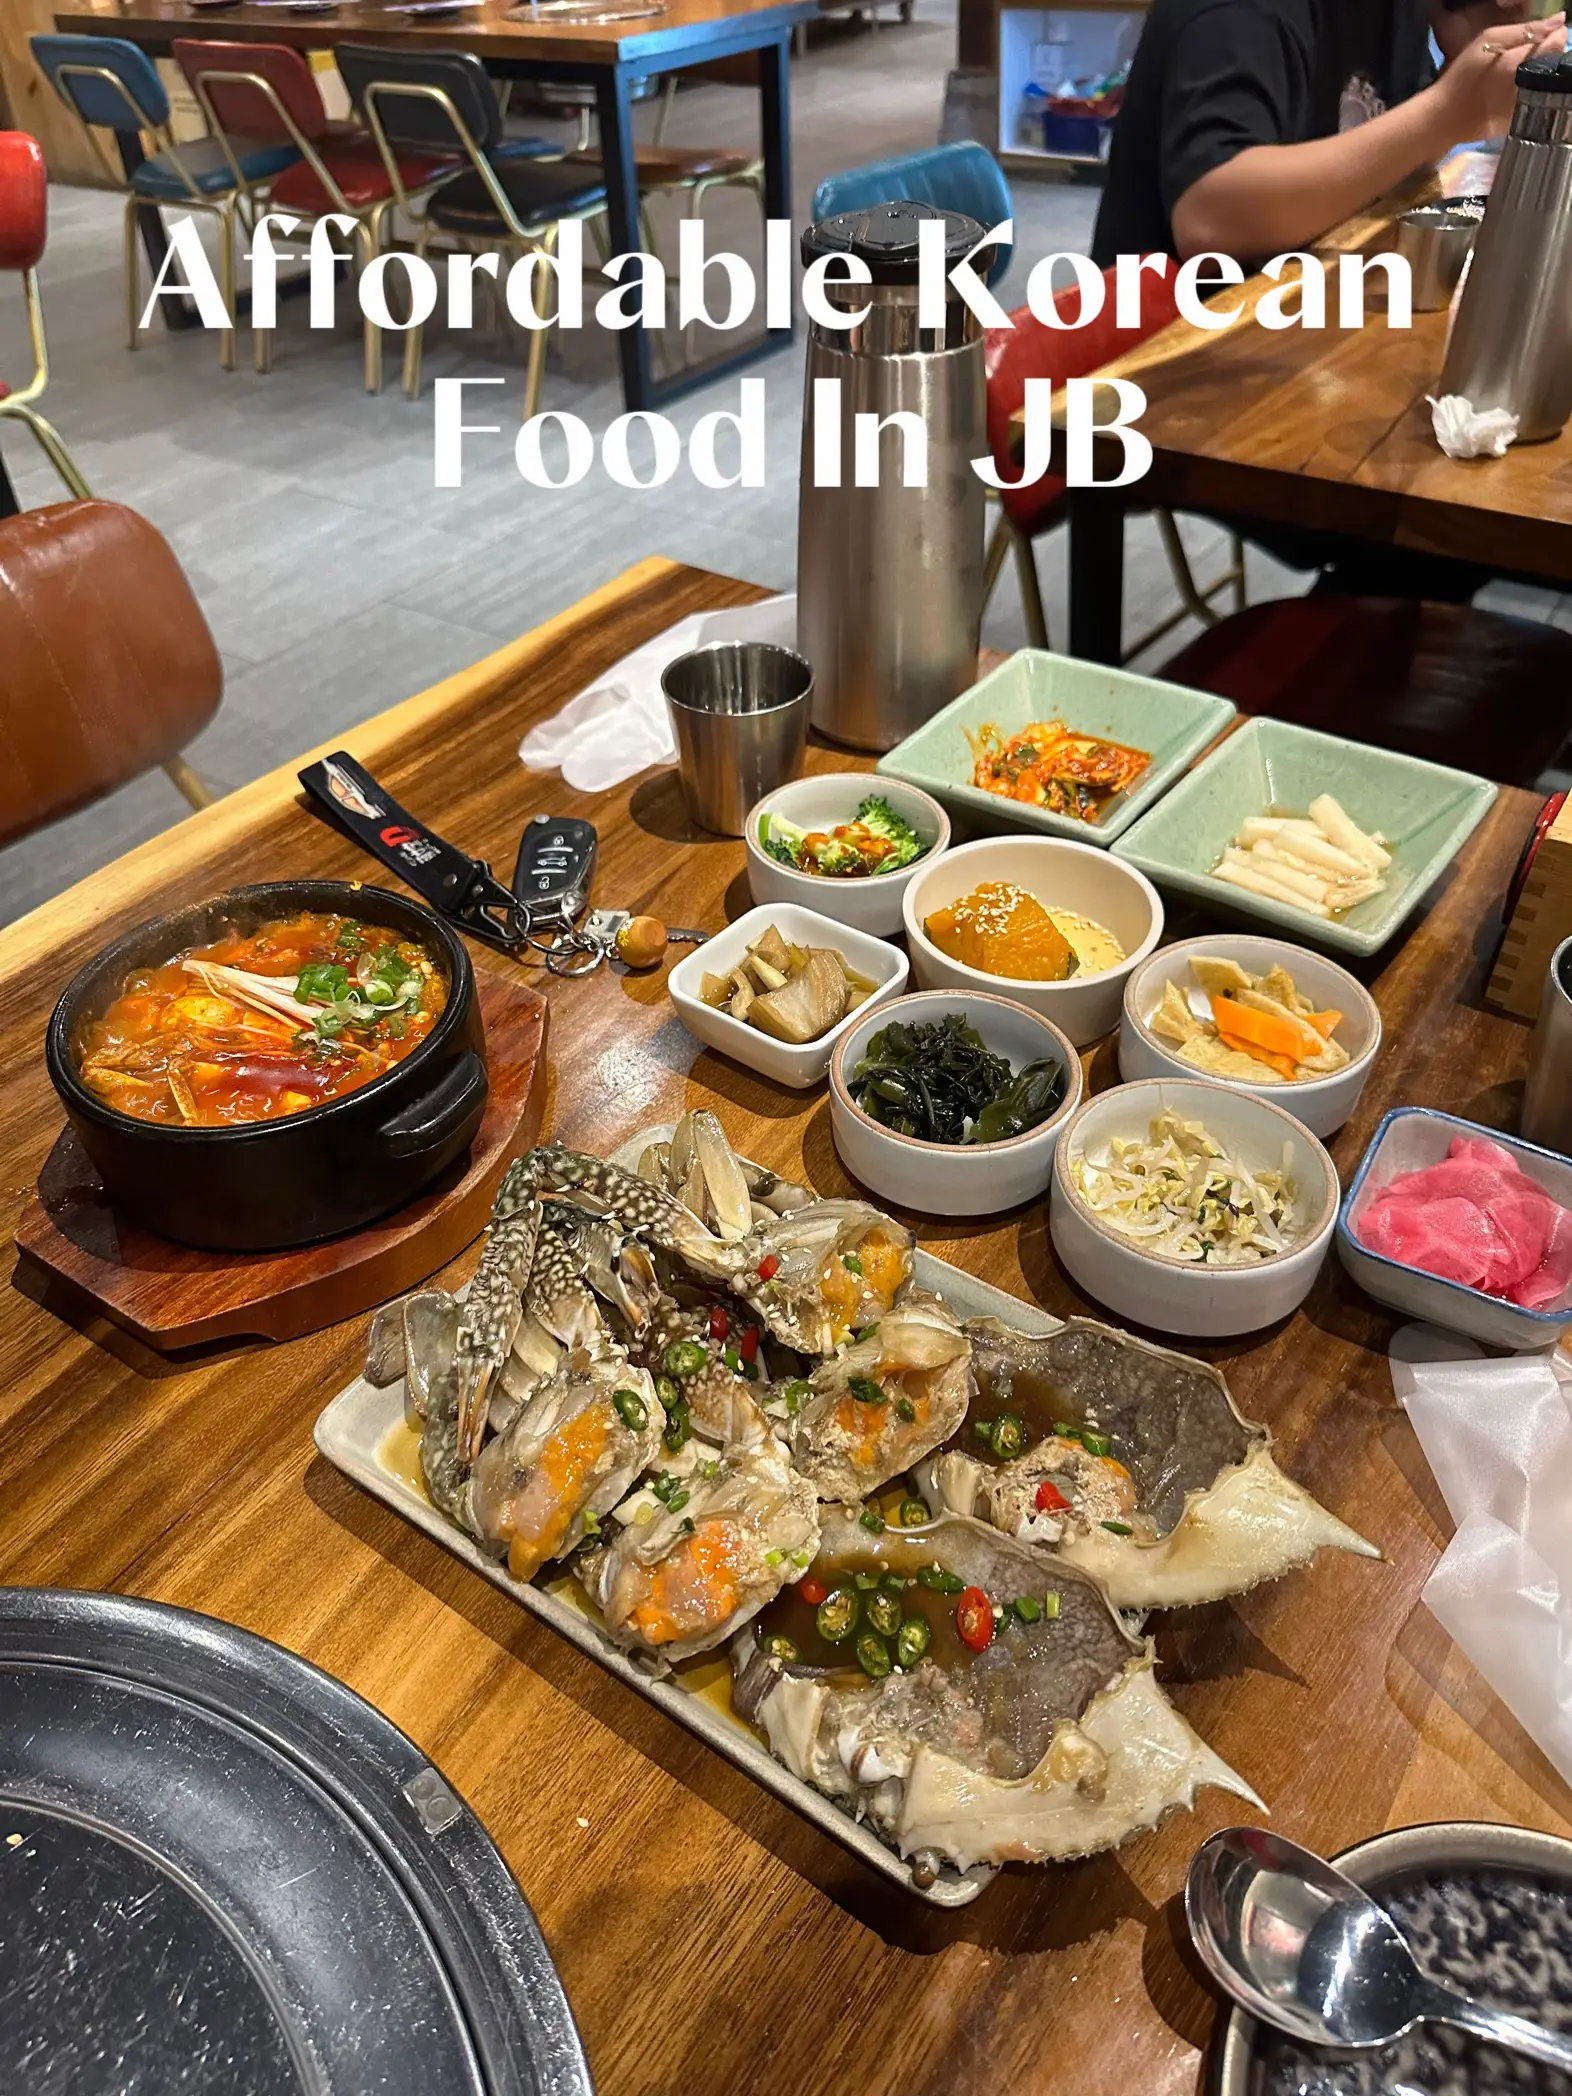 Affordable Korean Food In JB Near Customs!'s images